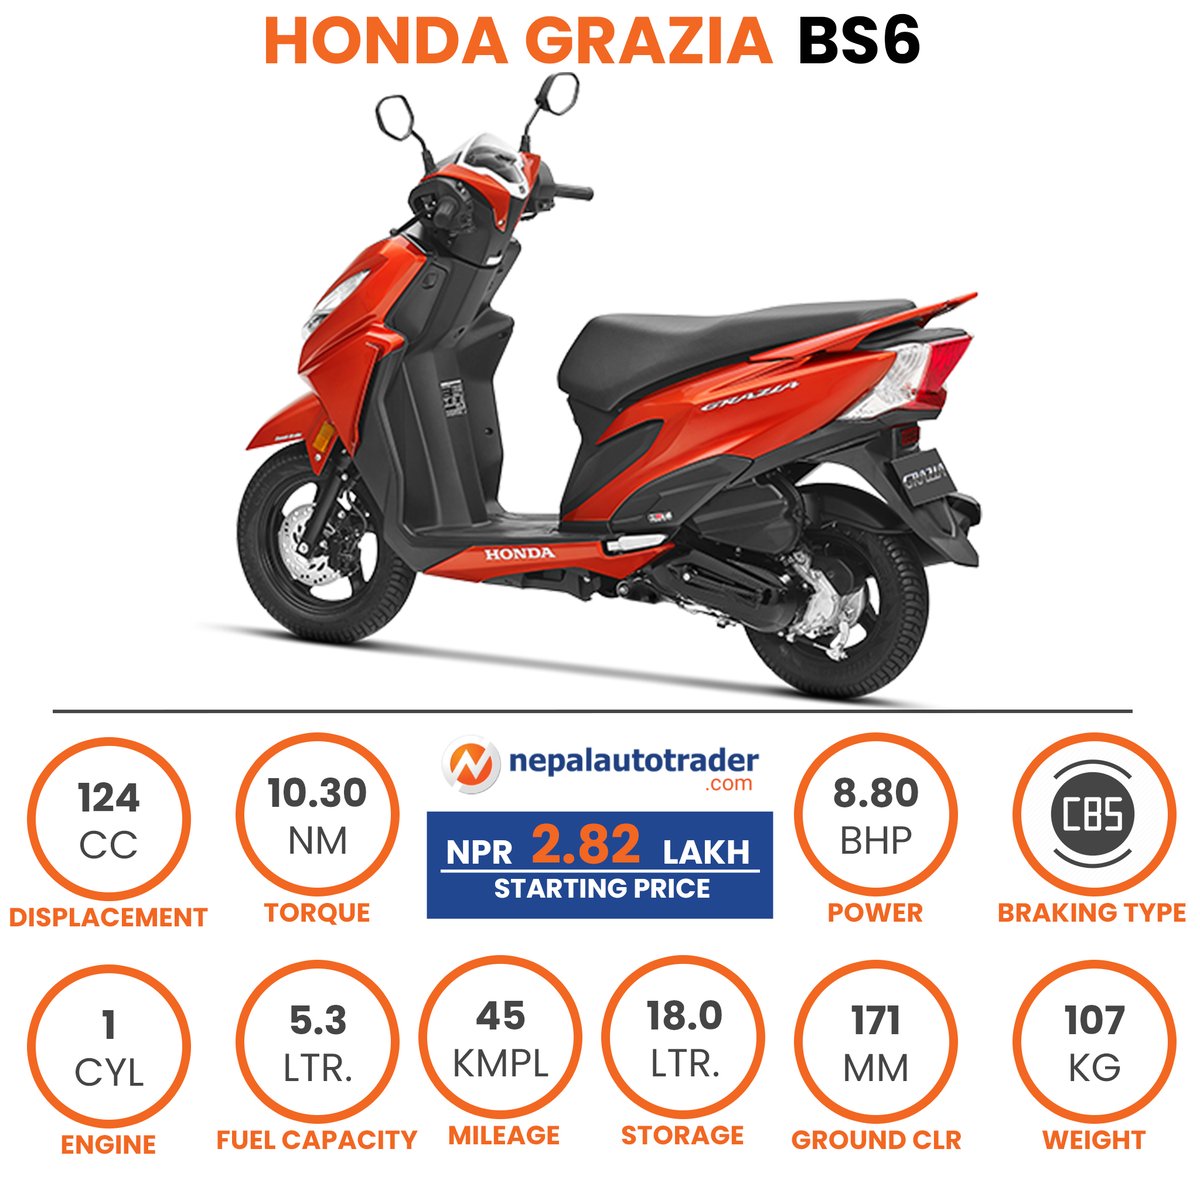 Honda Grazia BS6 Quick Specifications. #Autonews #AutonewsNepal #Scooters #ScootersNepal #HondaScooters #HondaNepal #BS6Scooters #HondaGrazia #HondaGraziaBS6 #NepalAutoTrader